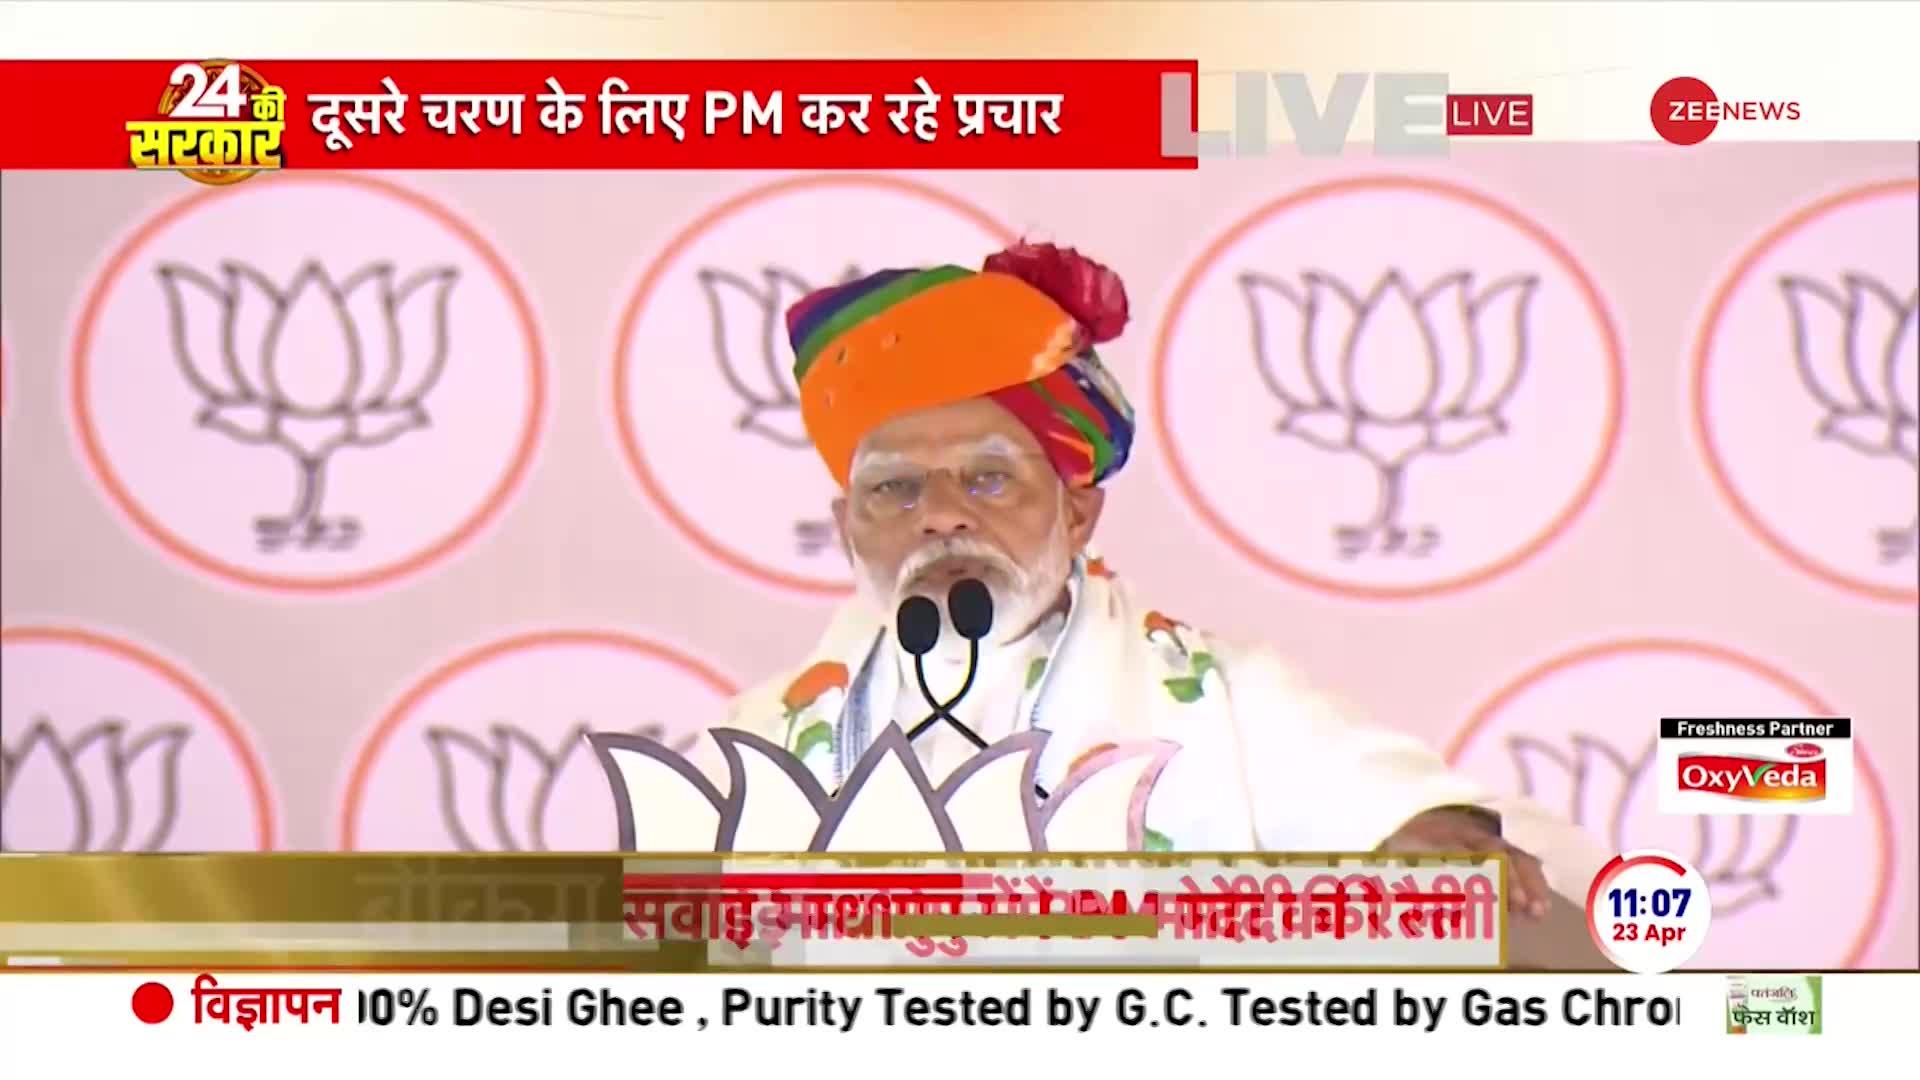 PM Modi Rajasthan Speech: कांग्रेस सरकार कुछ न करती- PM मोदी